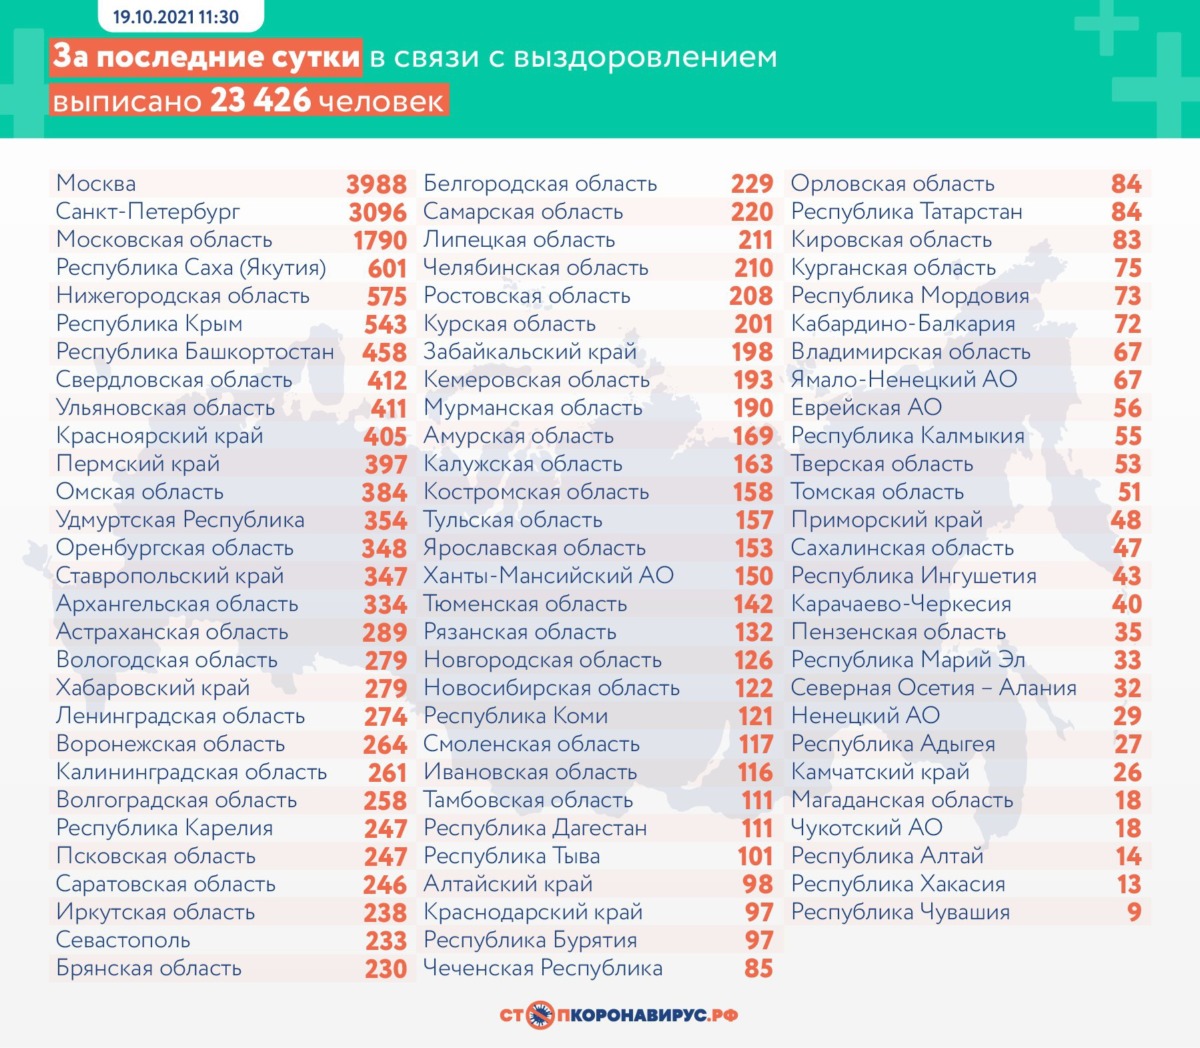 Оперативная статистика по коронавирусу в России на 19 октября